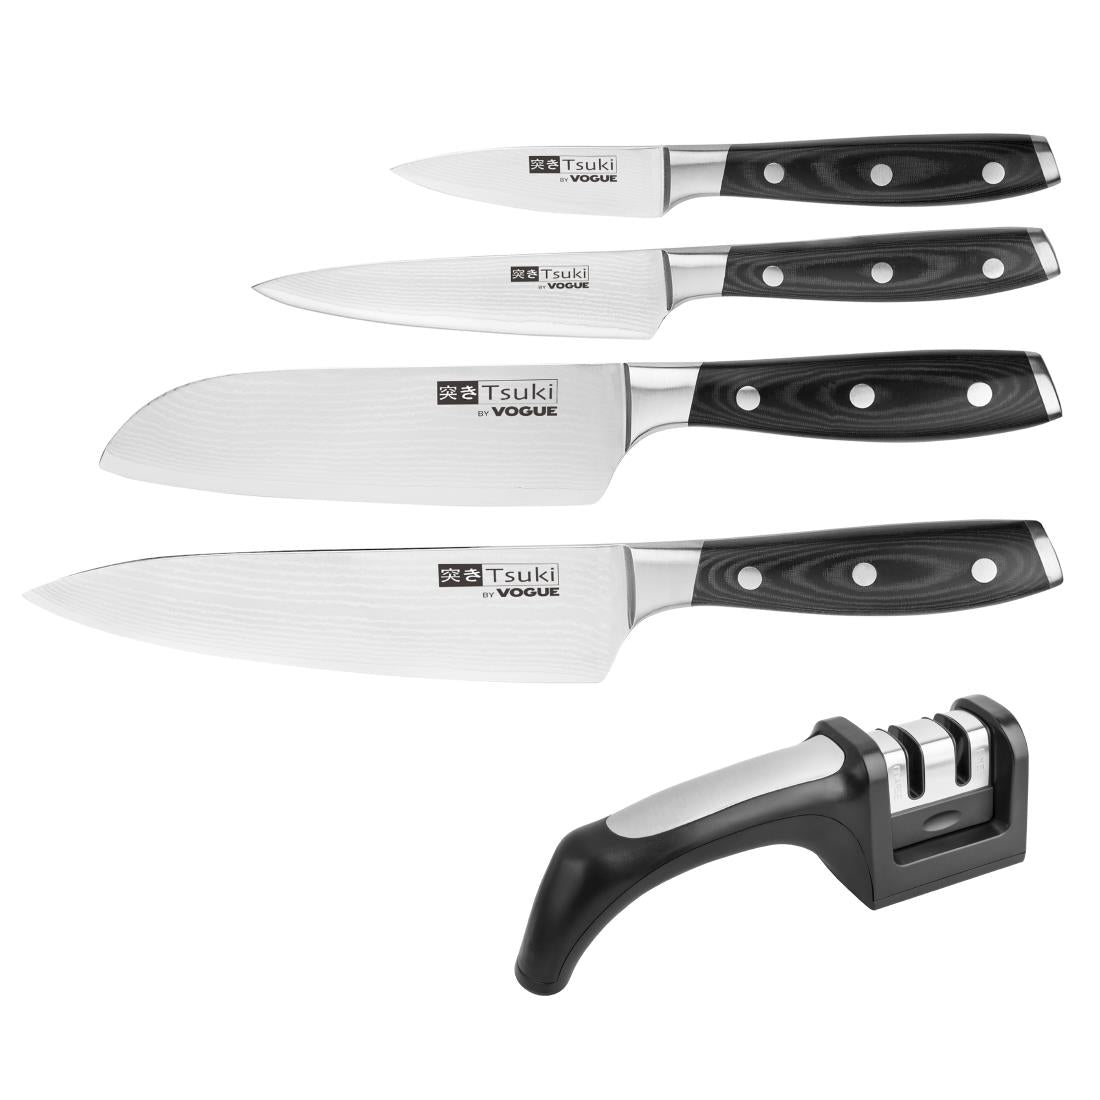 Tsuki Knife Set and Sharpener